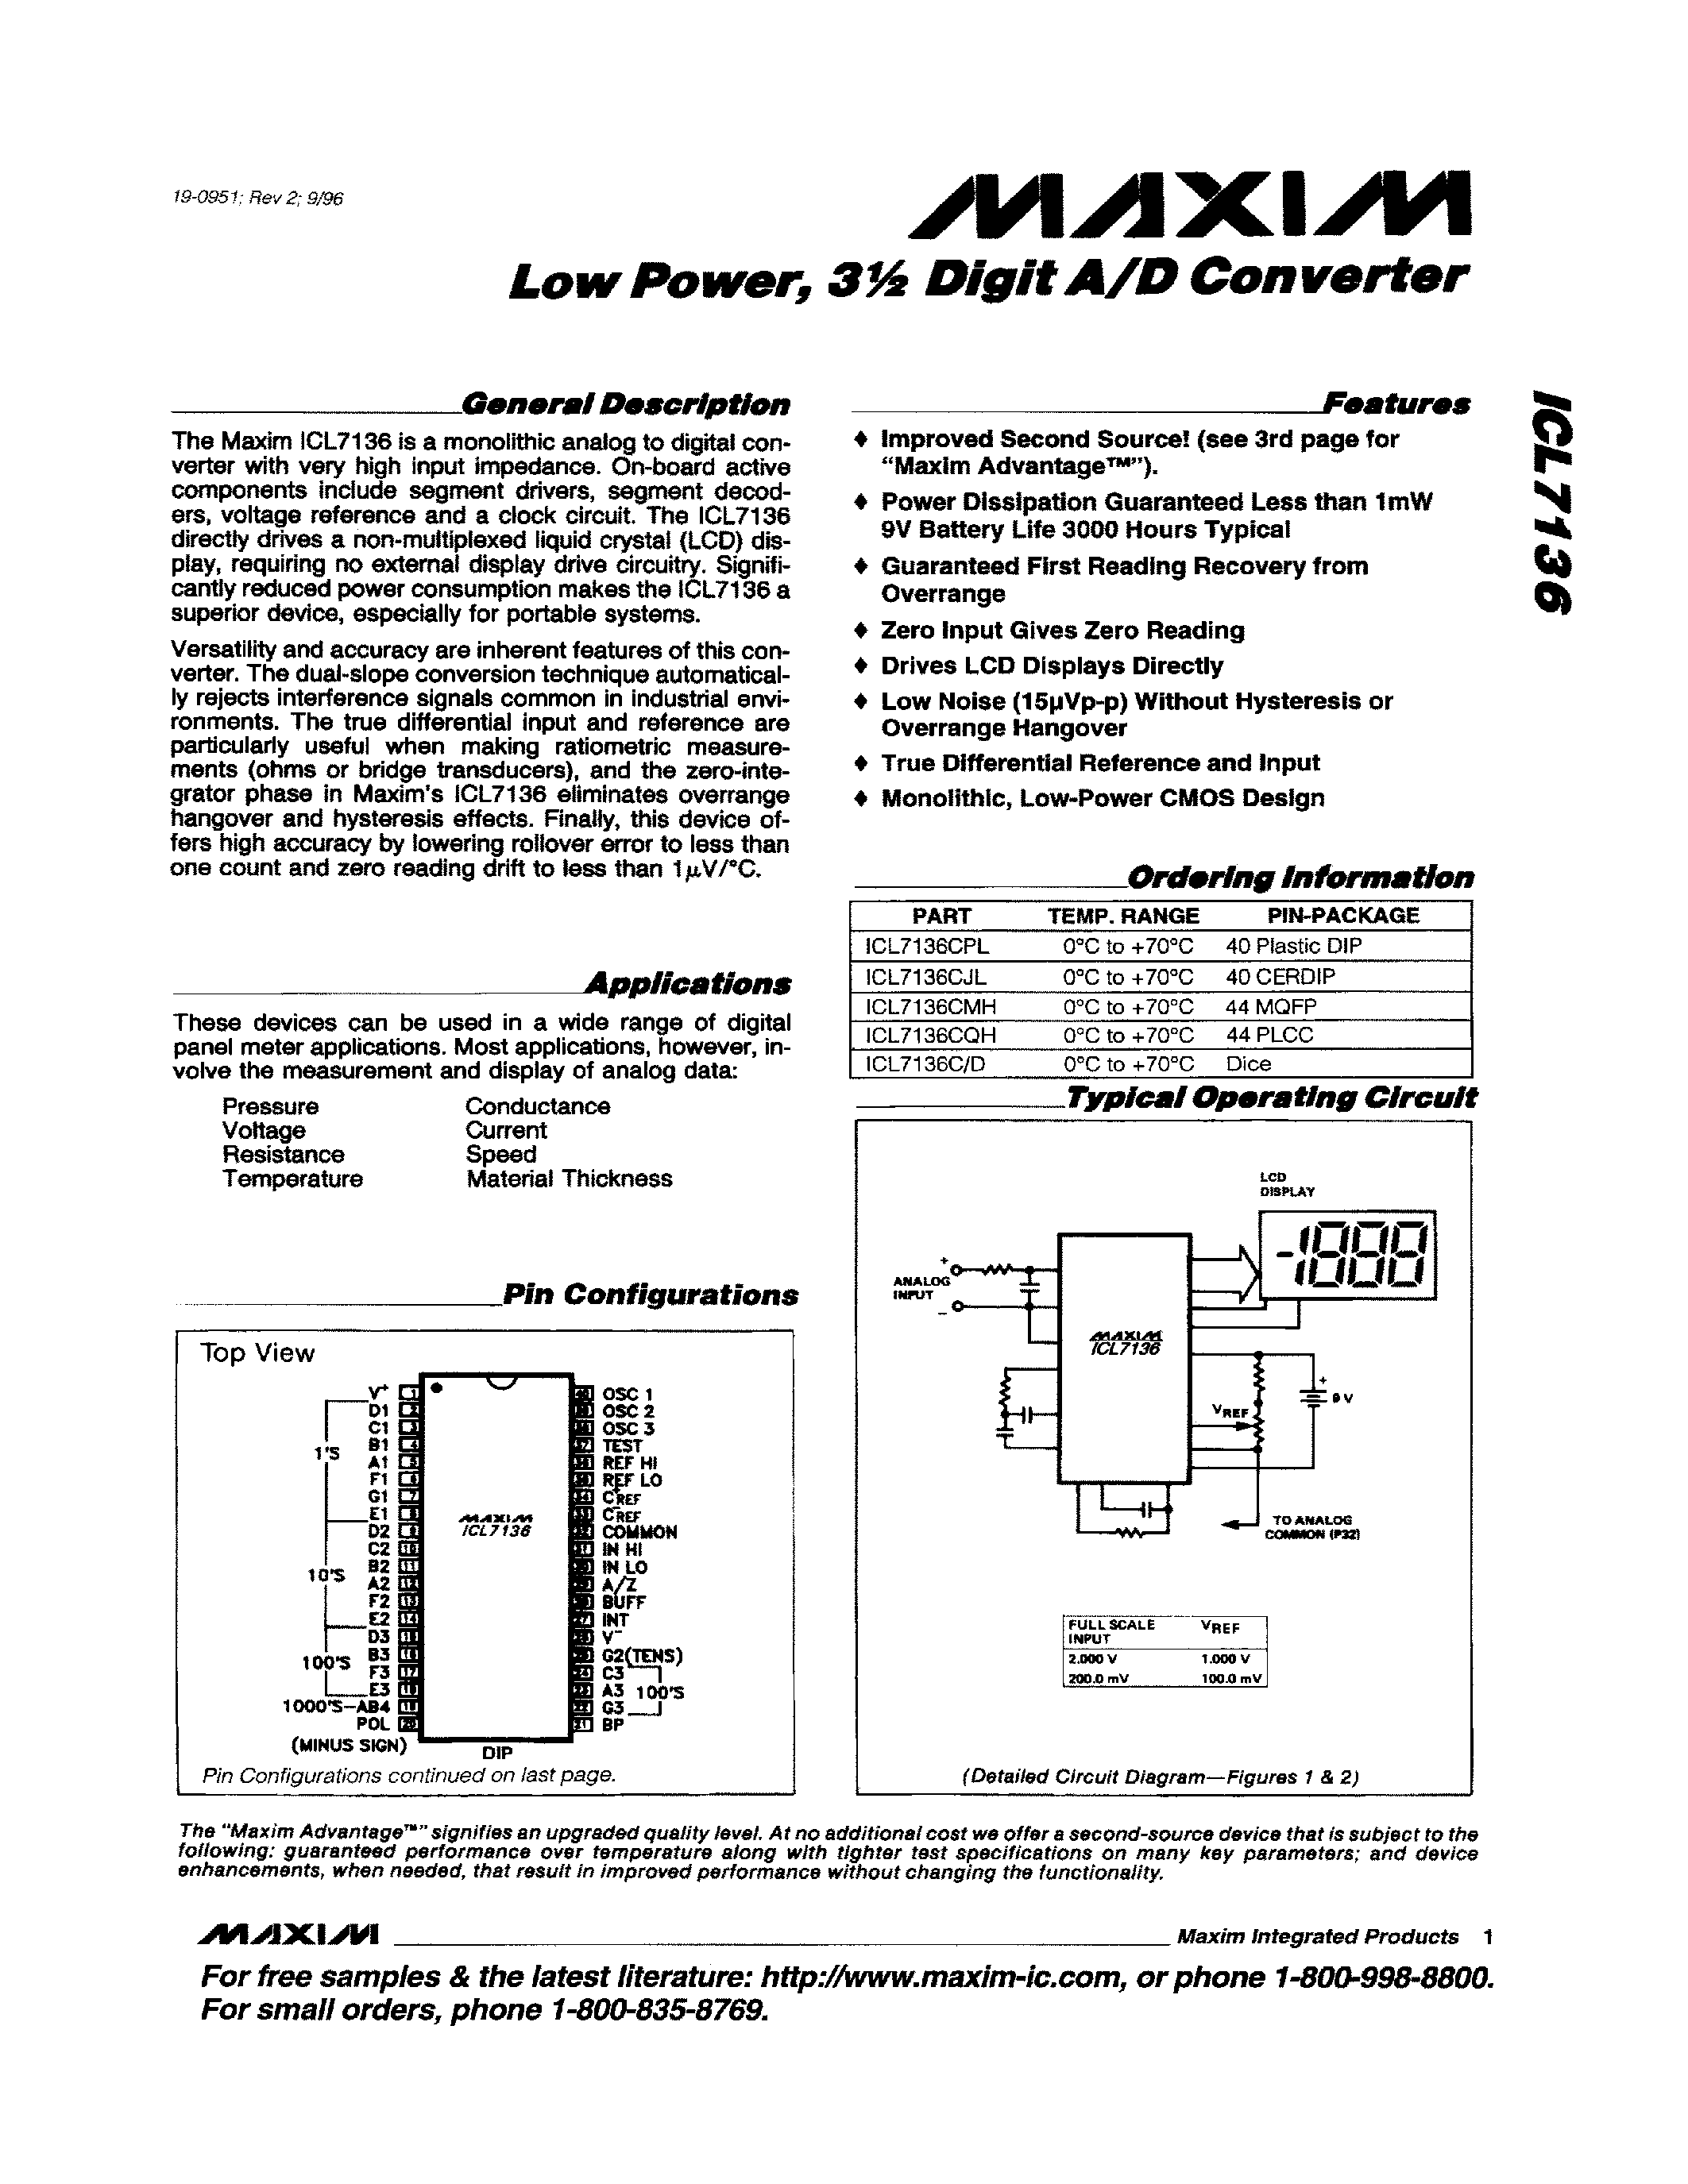 Даташит ICL7136C/D - Low Power/ 3 Digit A/D Converter страница 1